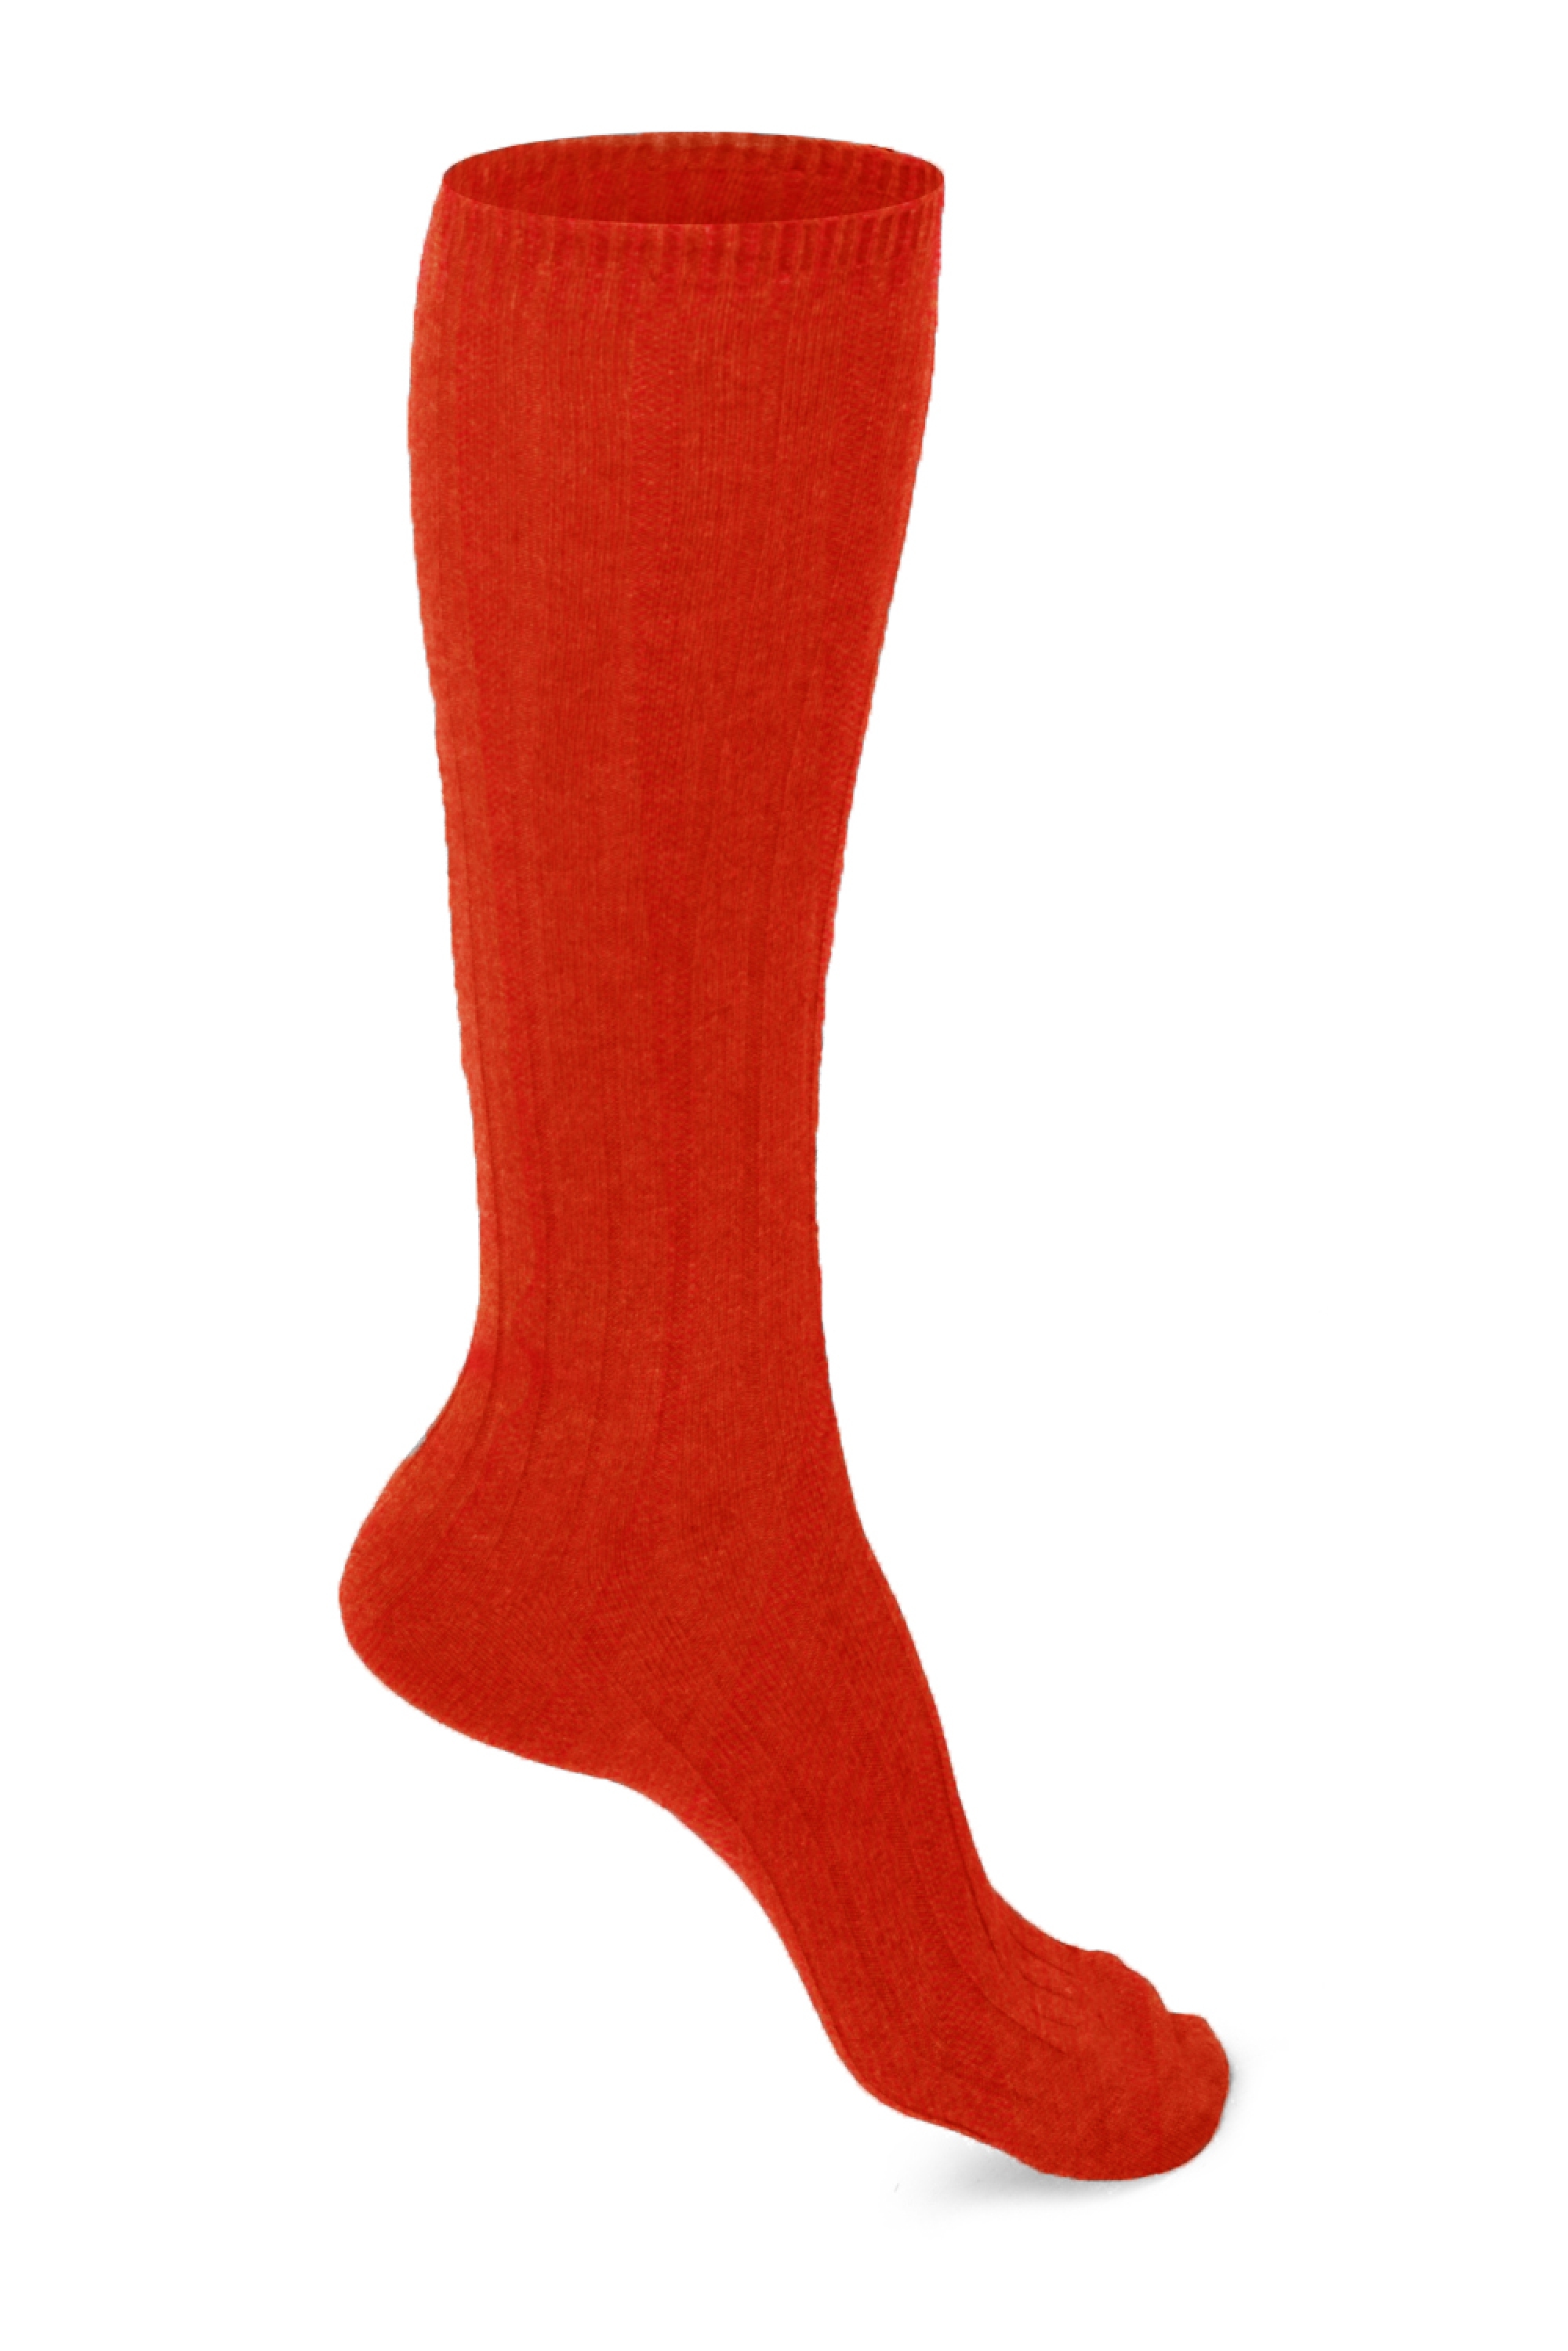 Cashmere accessories socks dragibus long w bloody orange 5 5 8 39 42 